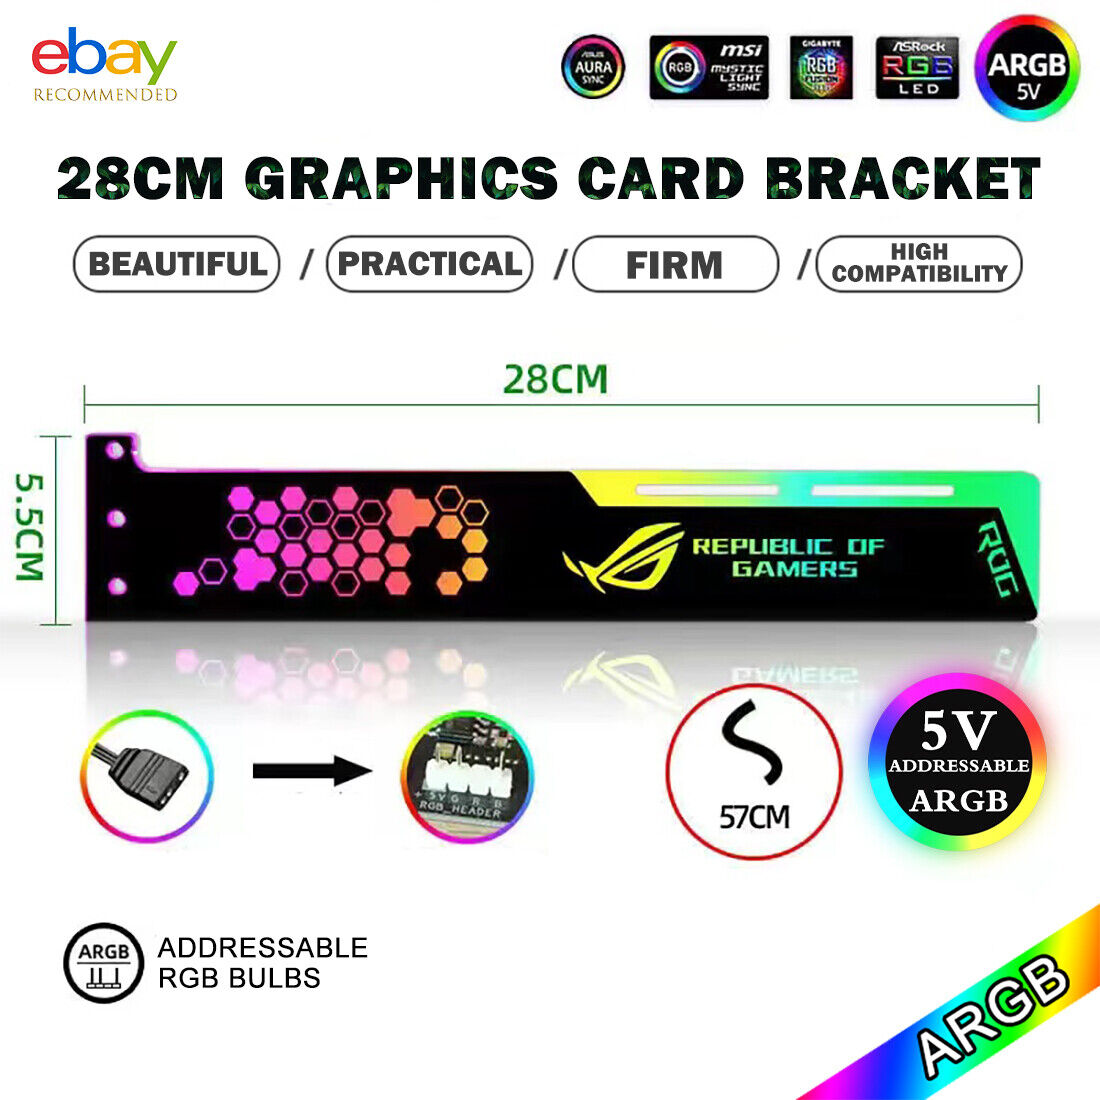 LED Acrylic Graphics Card Bracket use for Brace GPU RGB Sync Light use Fix Video